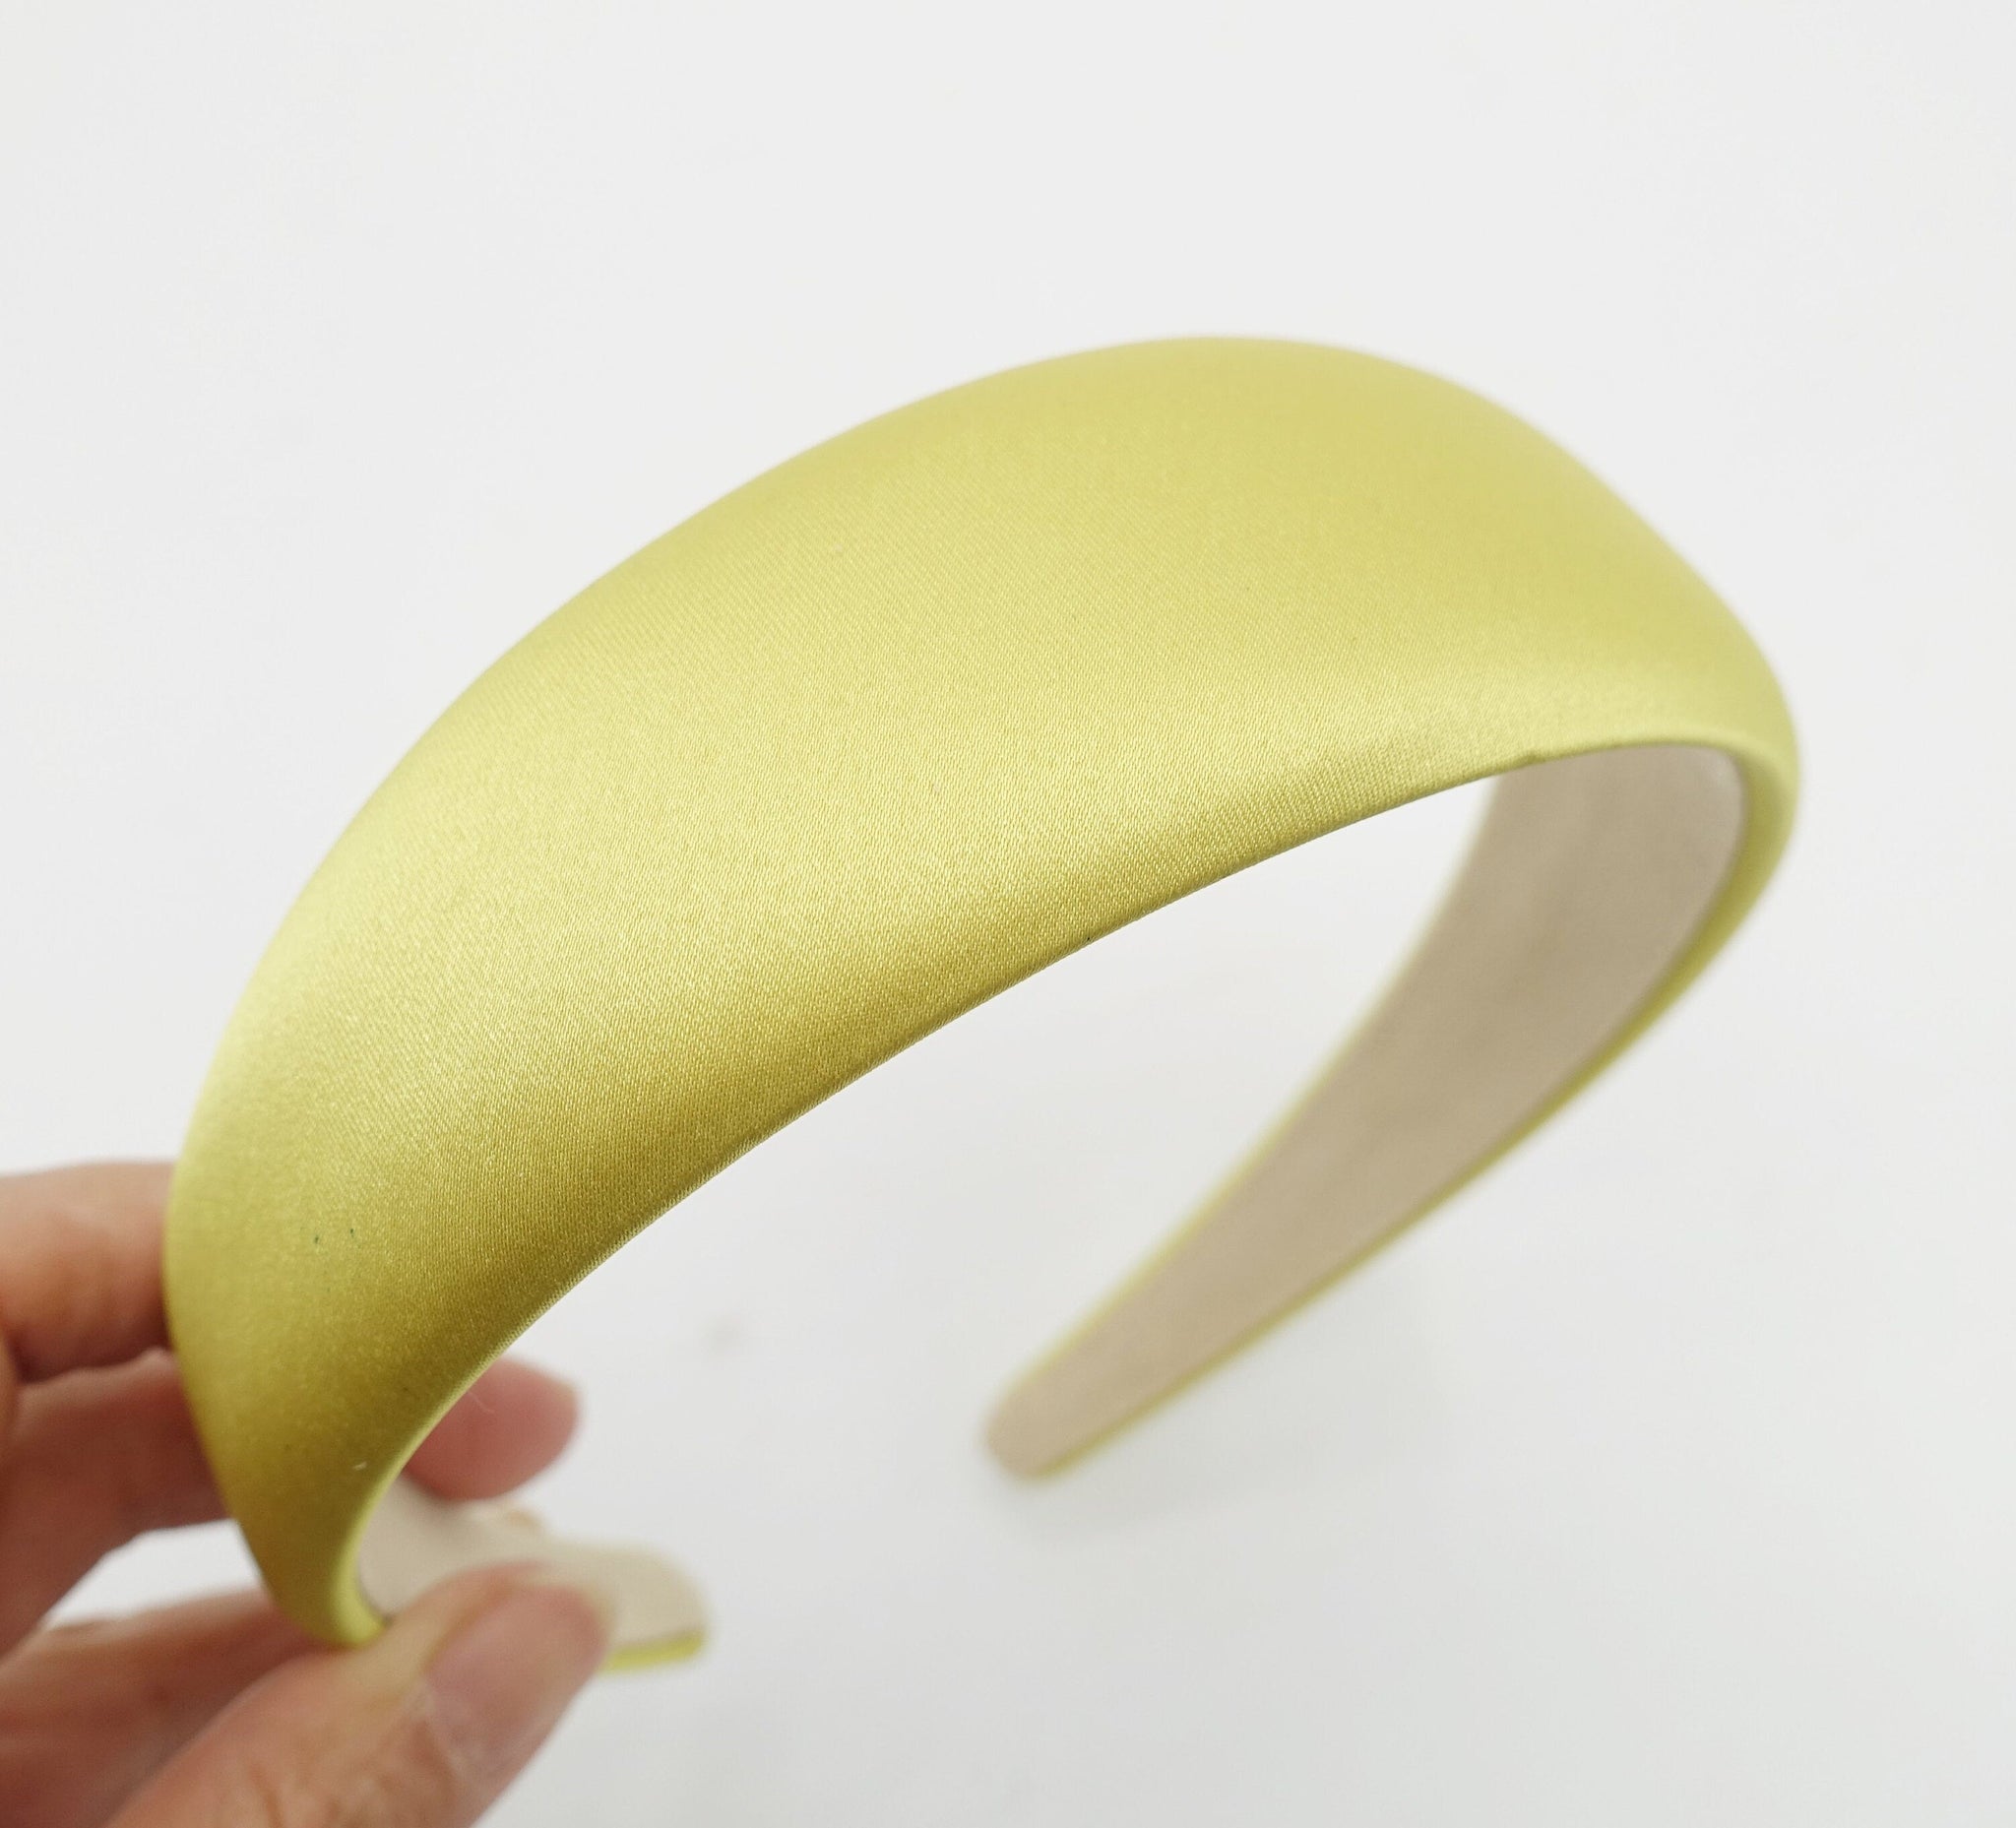 veryshine.com Headband Lemon yellow satin padded headband colorful basic women hairband hair accessory